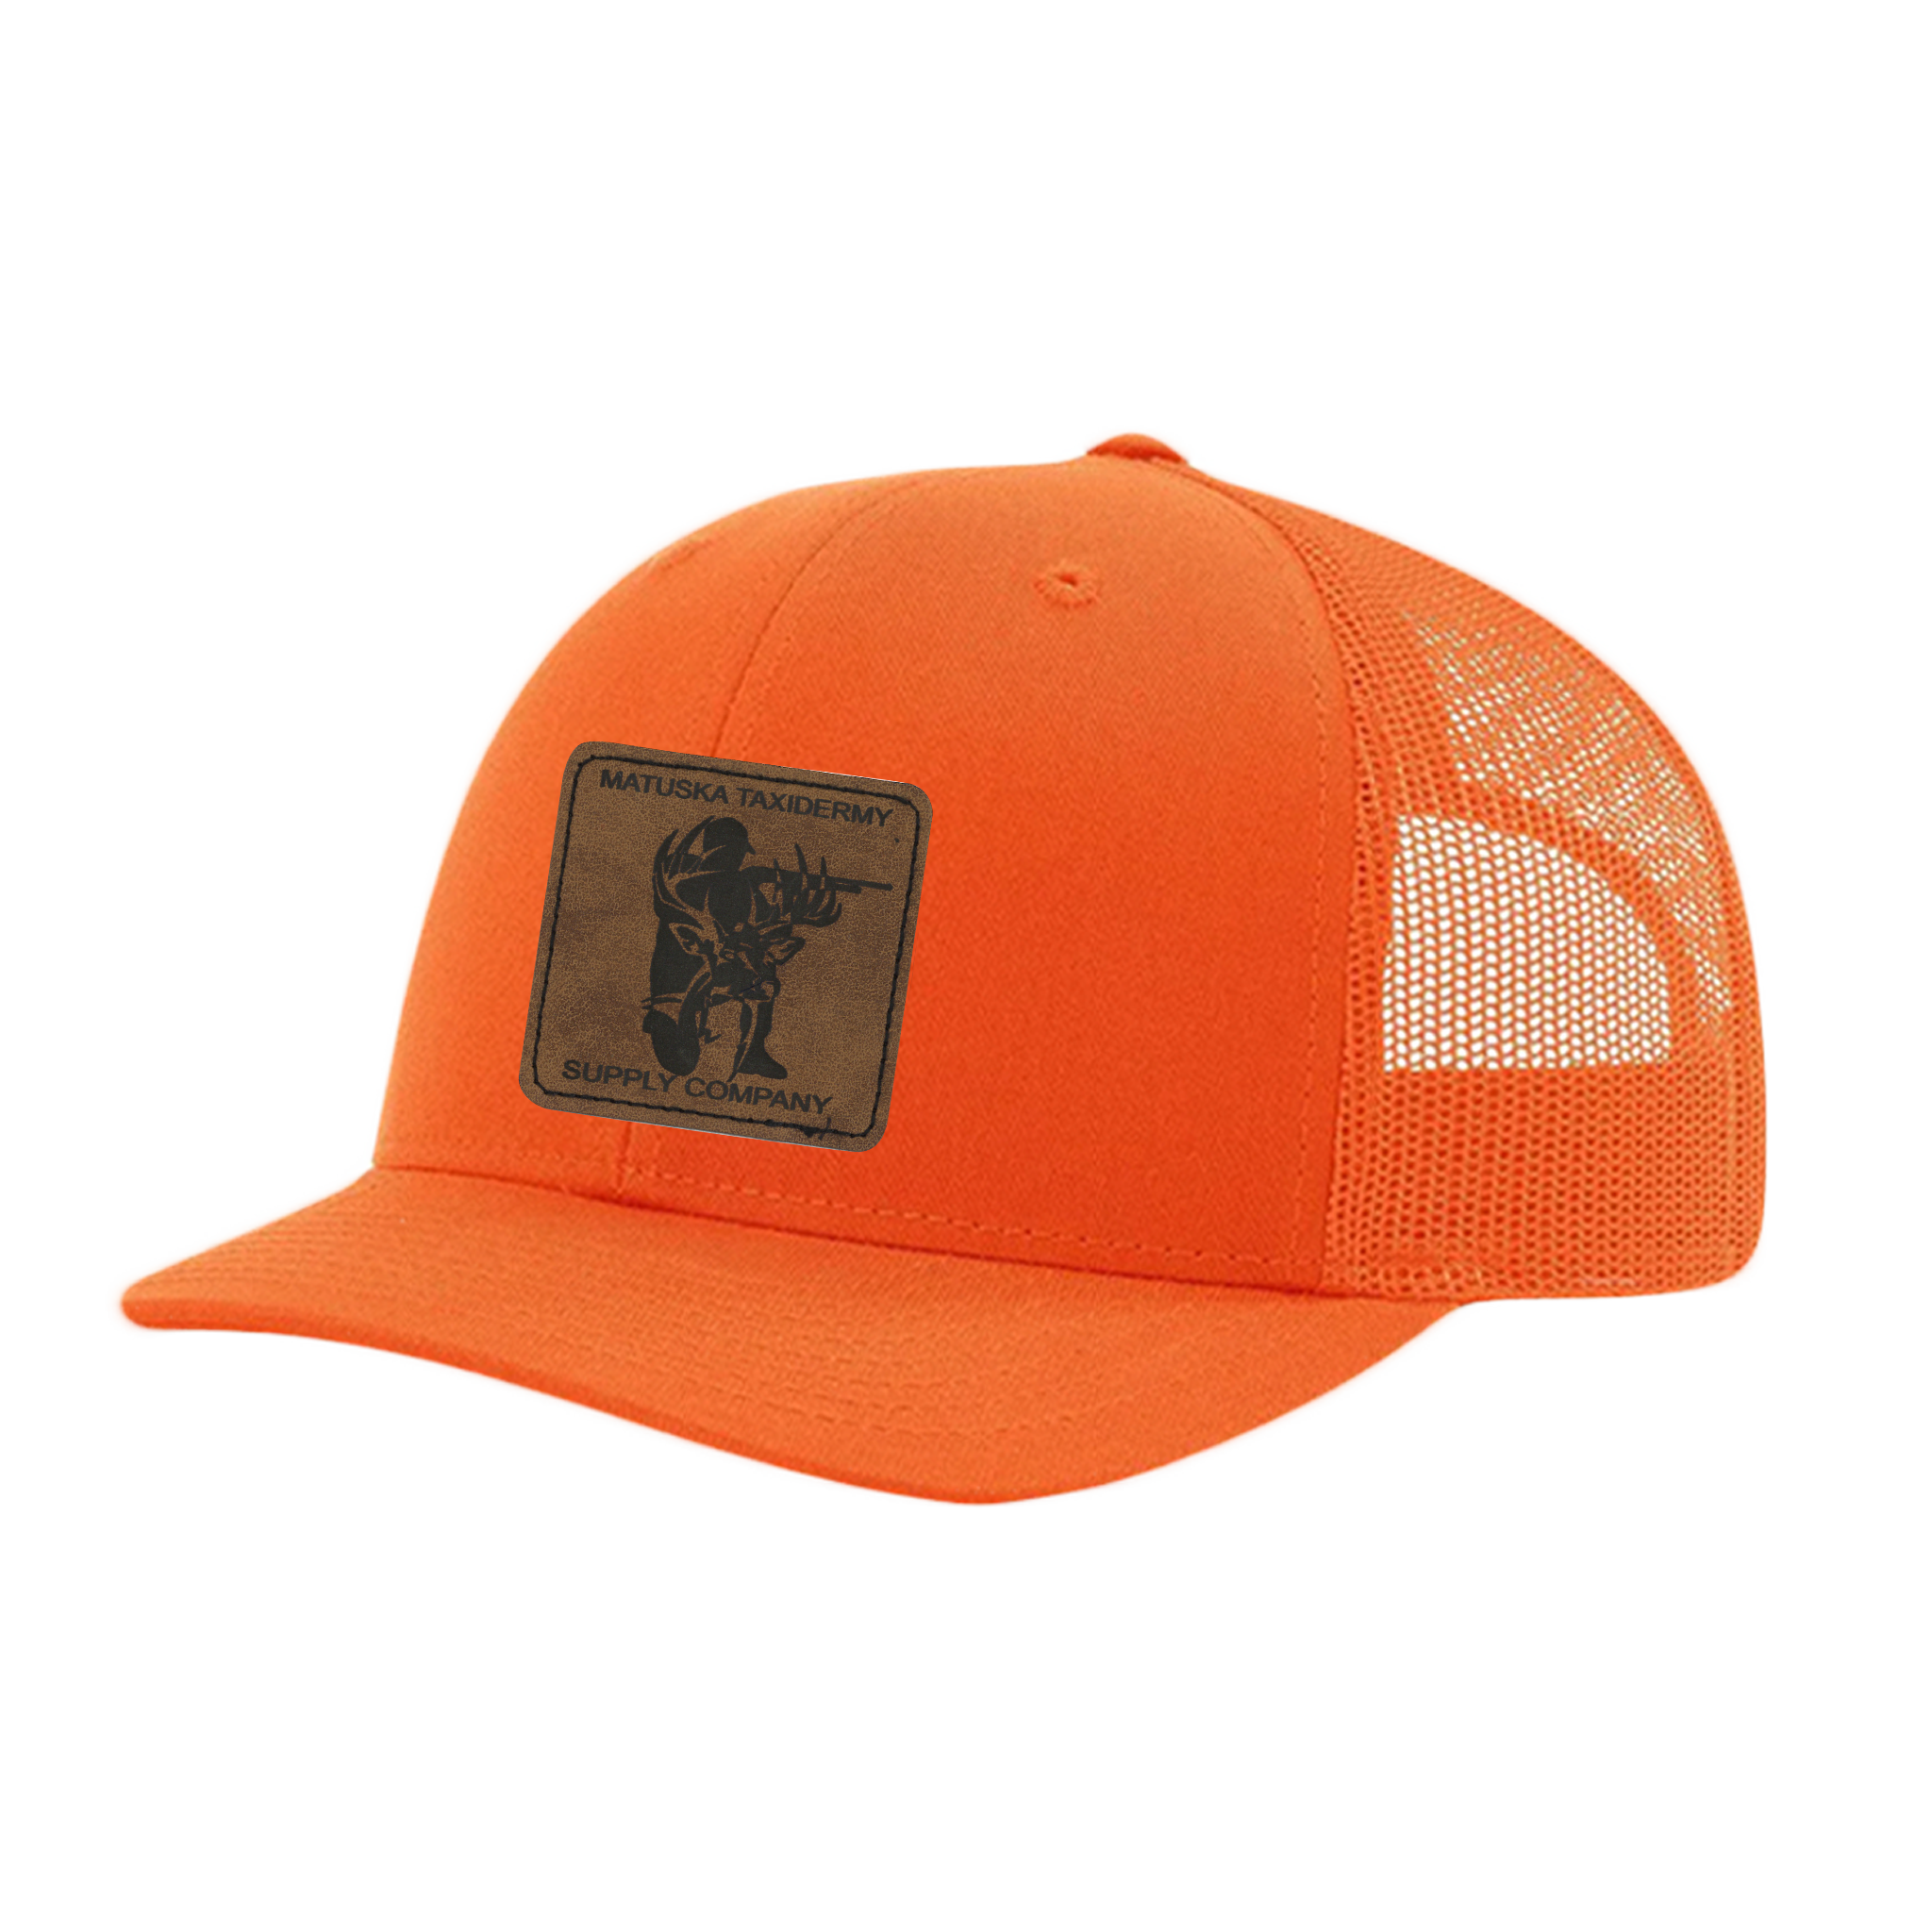 Adjustable Trucker Hat - Orange (Hunting Patch)